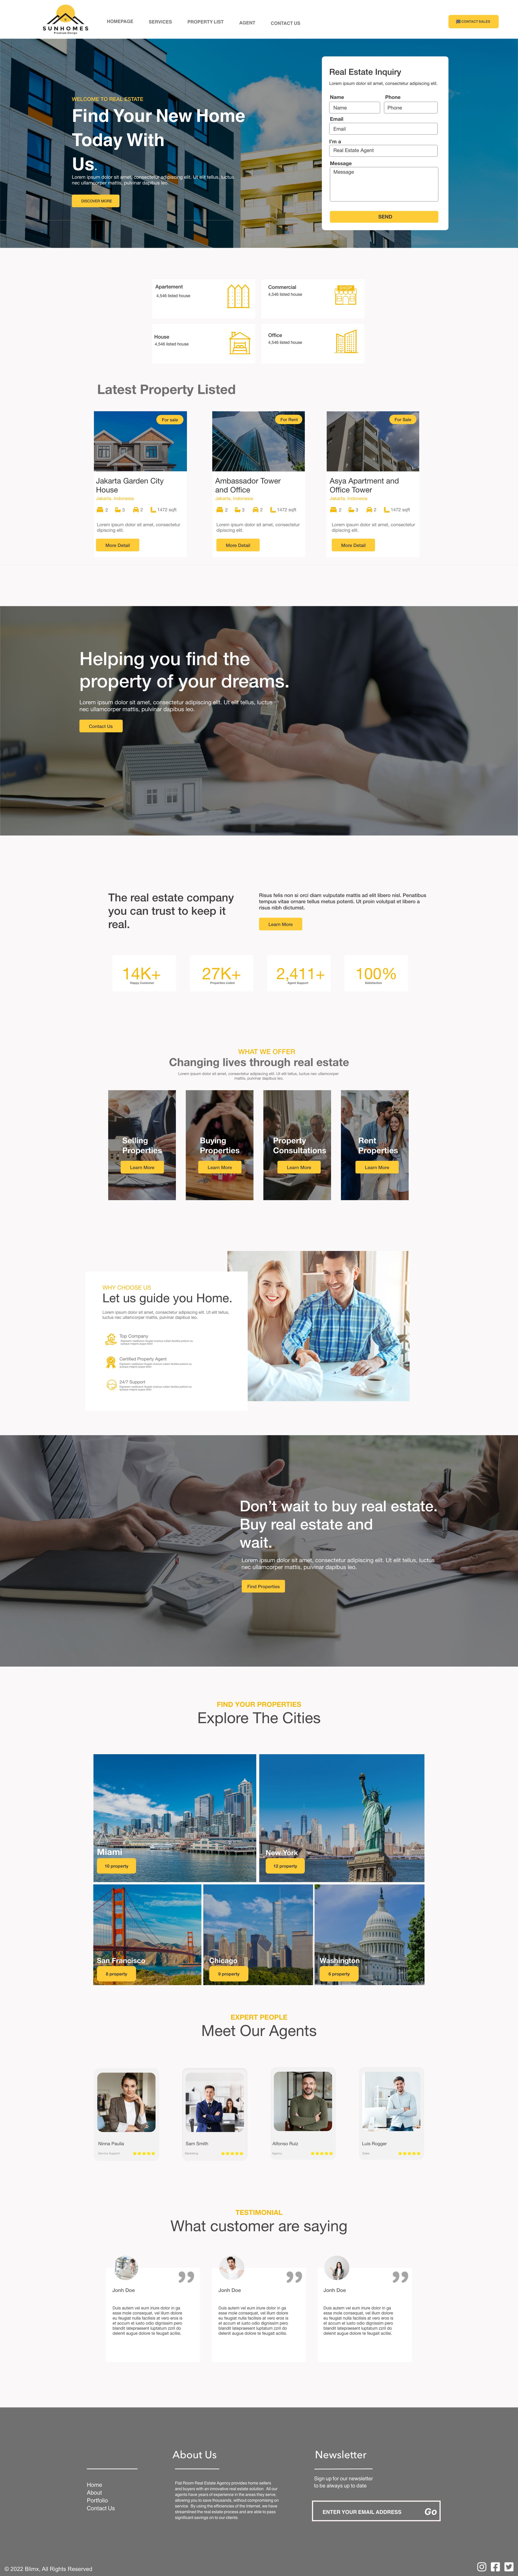 Your New Home Website Design